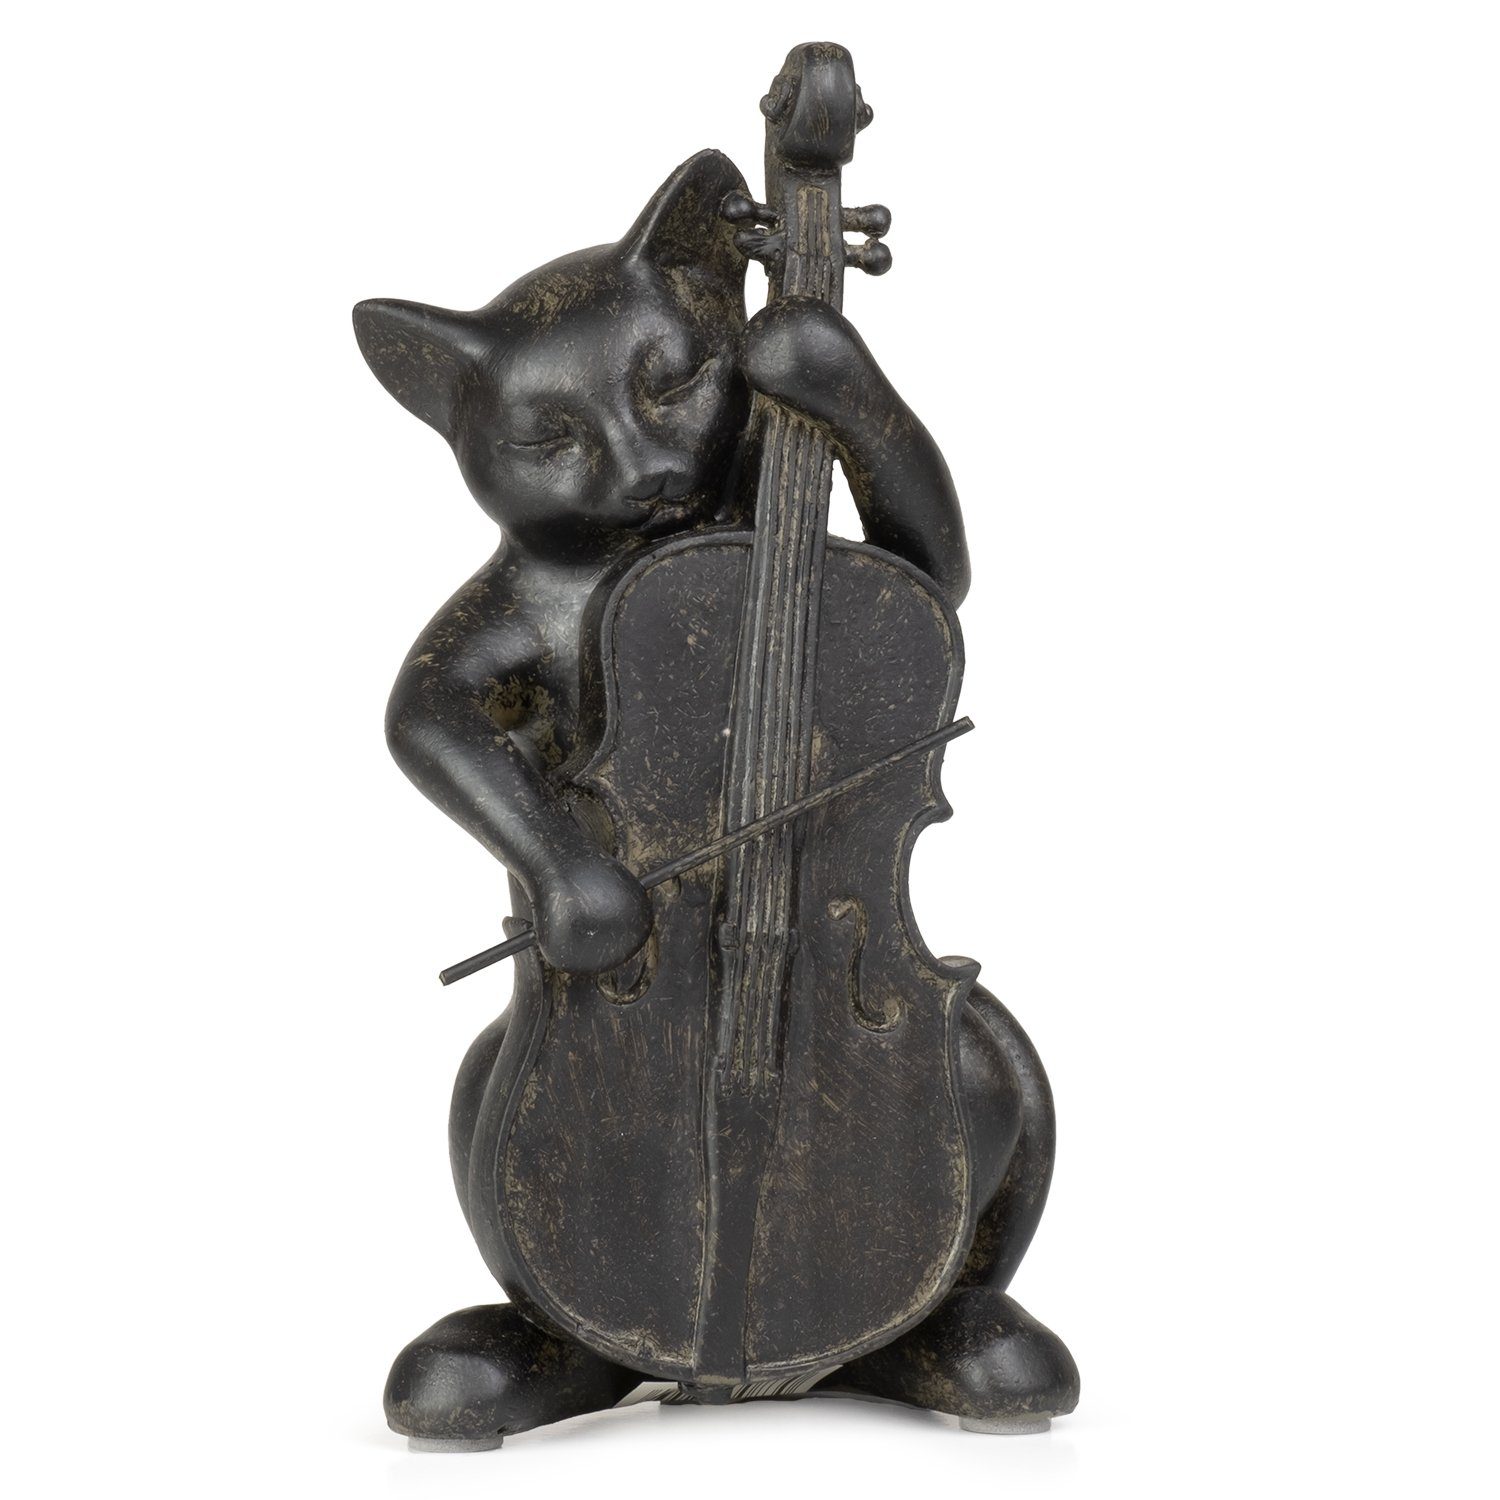 Moritz Dekofigur Deko-Figur Katze spielt Cello aus Polyresin schwarz Musikinstrument, Dekofigur aus Polyresin Dekoelement Dekoration Figuren